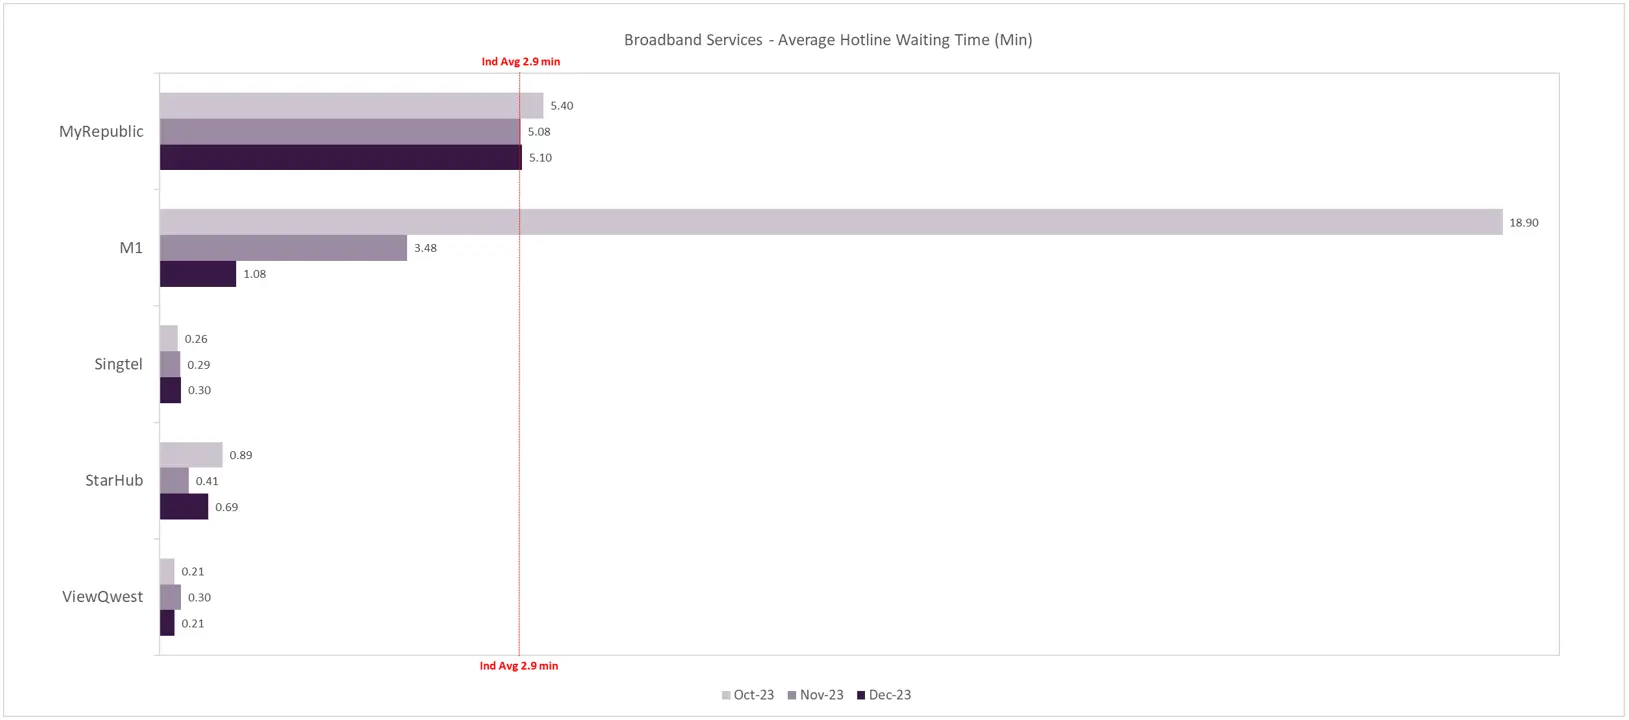 Broadband Services Average Hotline Waiting Time Min